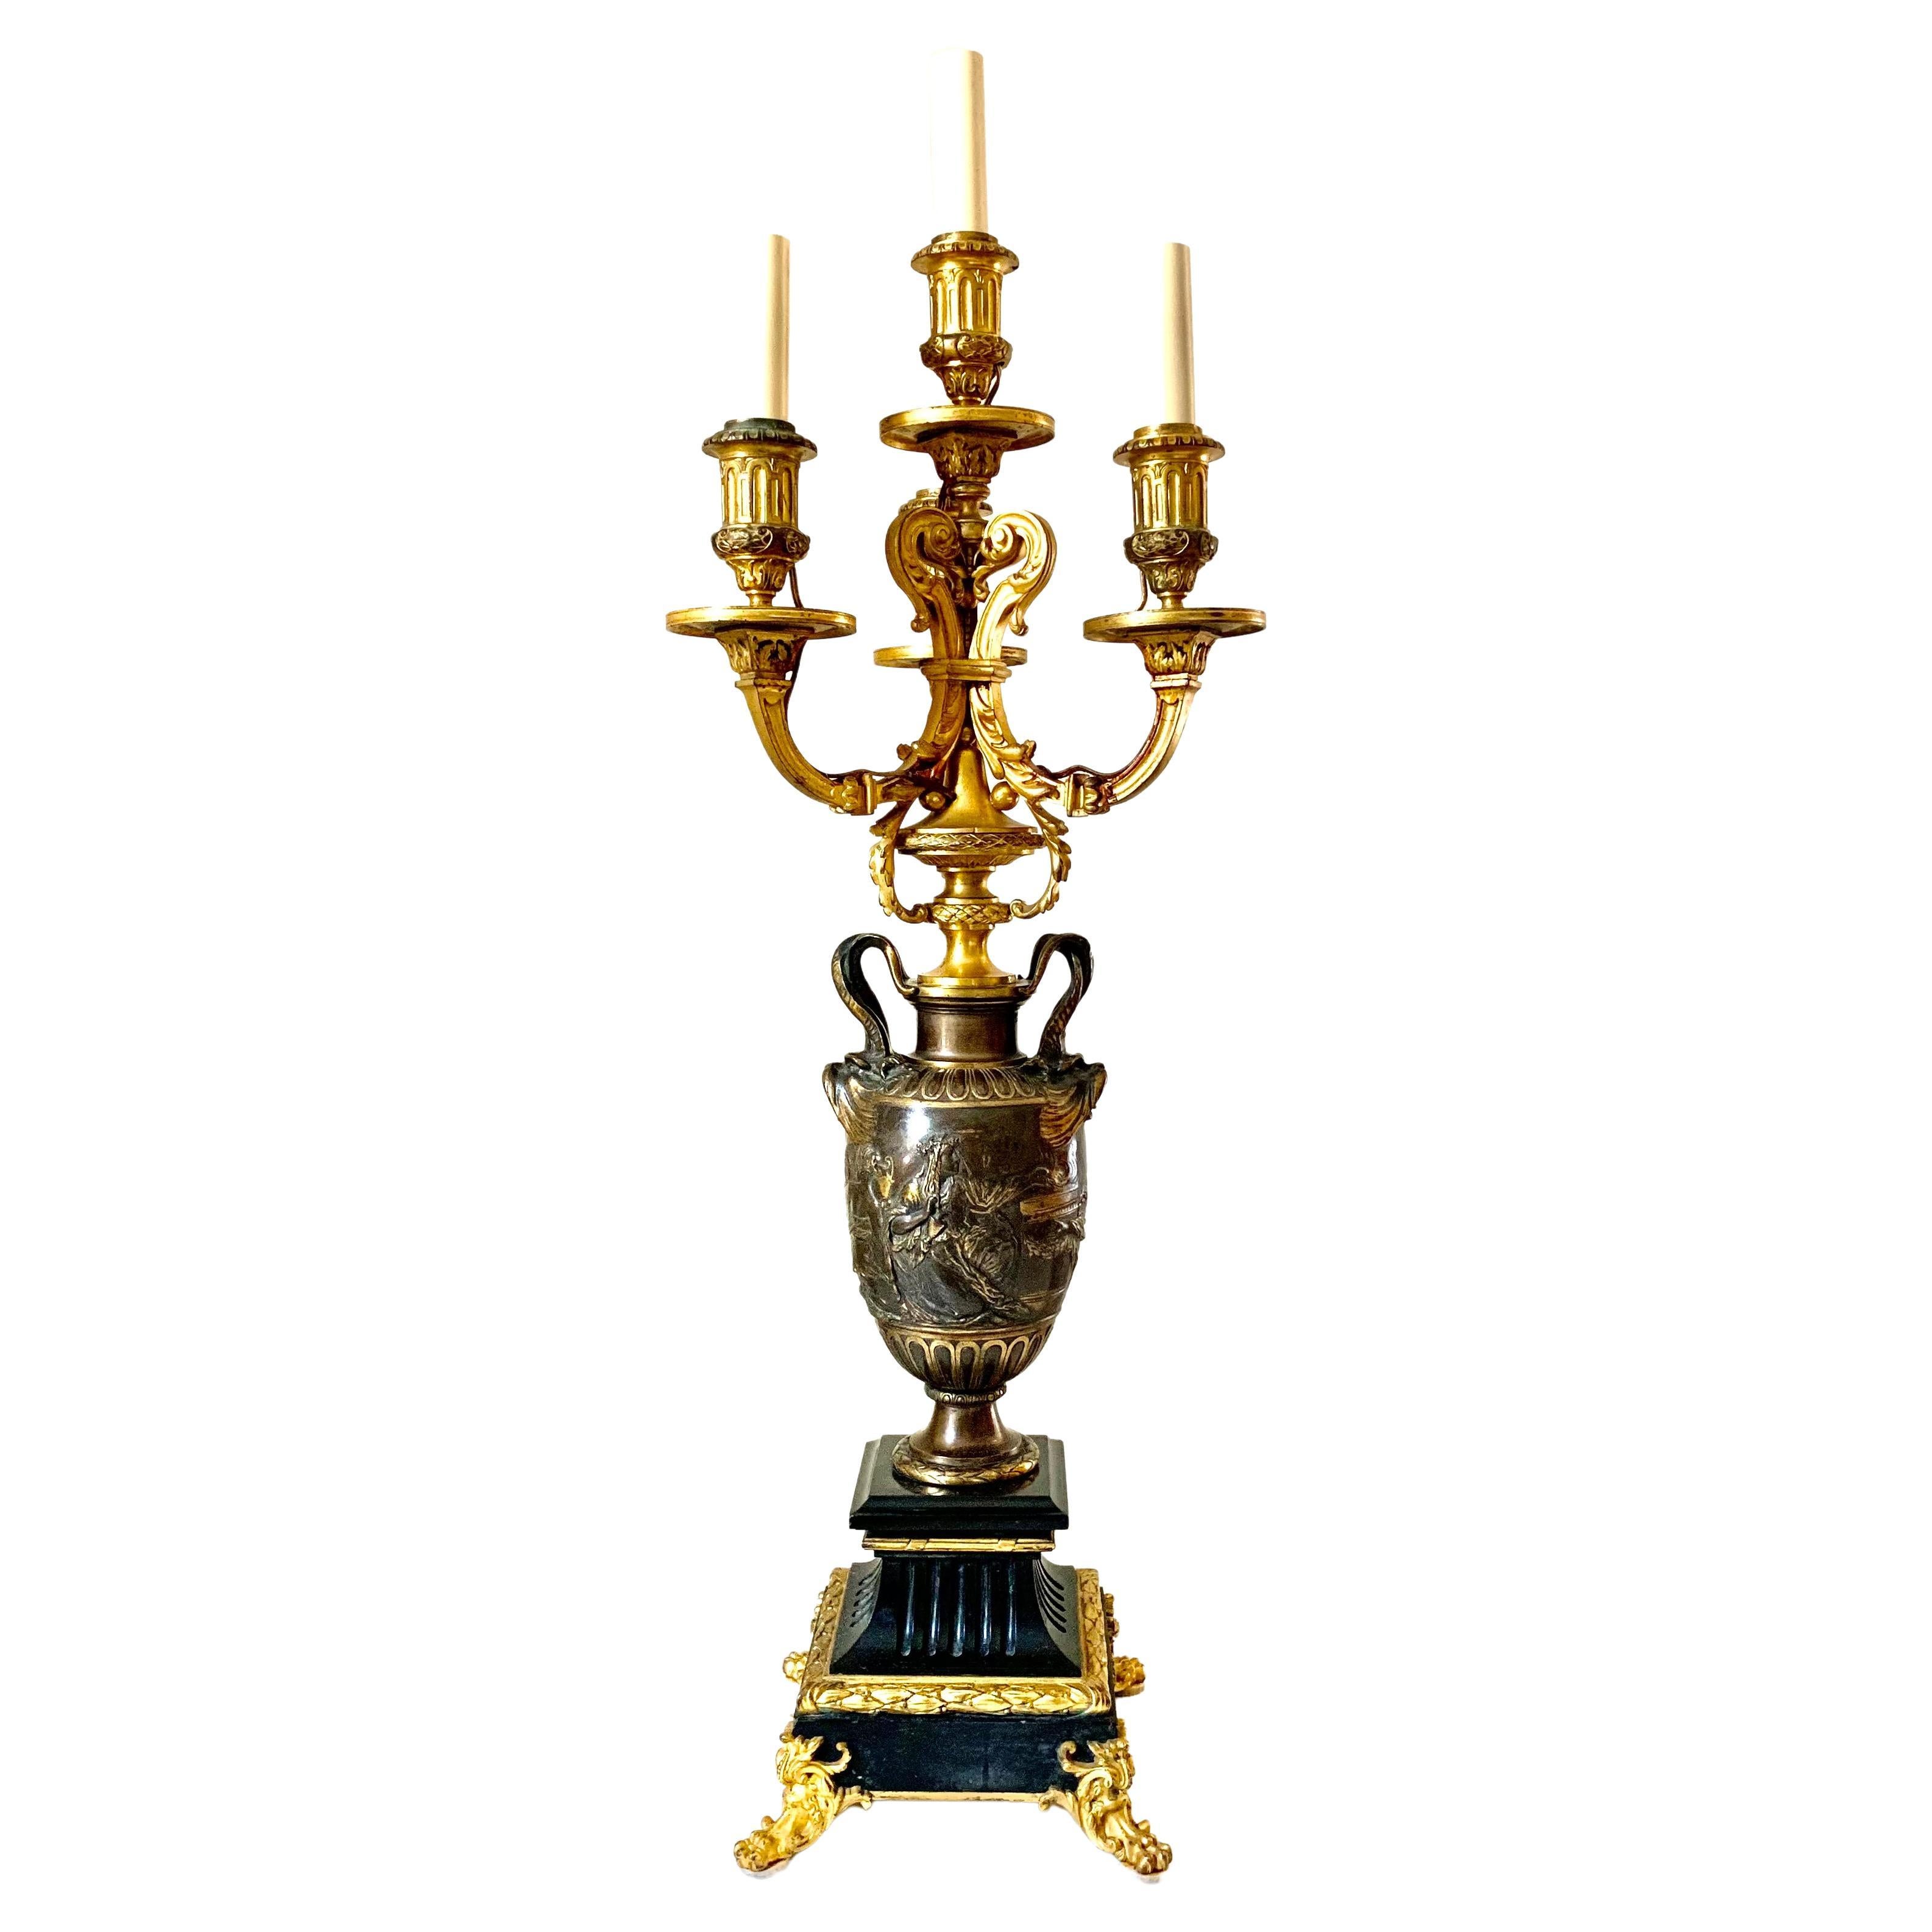 Superb F. Barbidienne Gilt, Patinated Bronze Napoleon III Figural Table Lamp